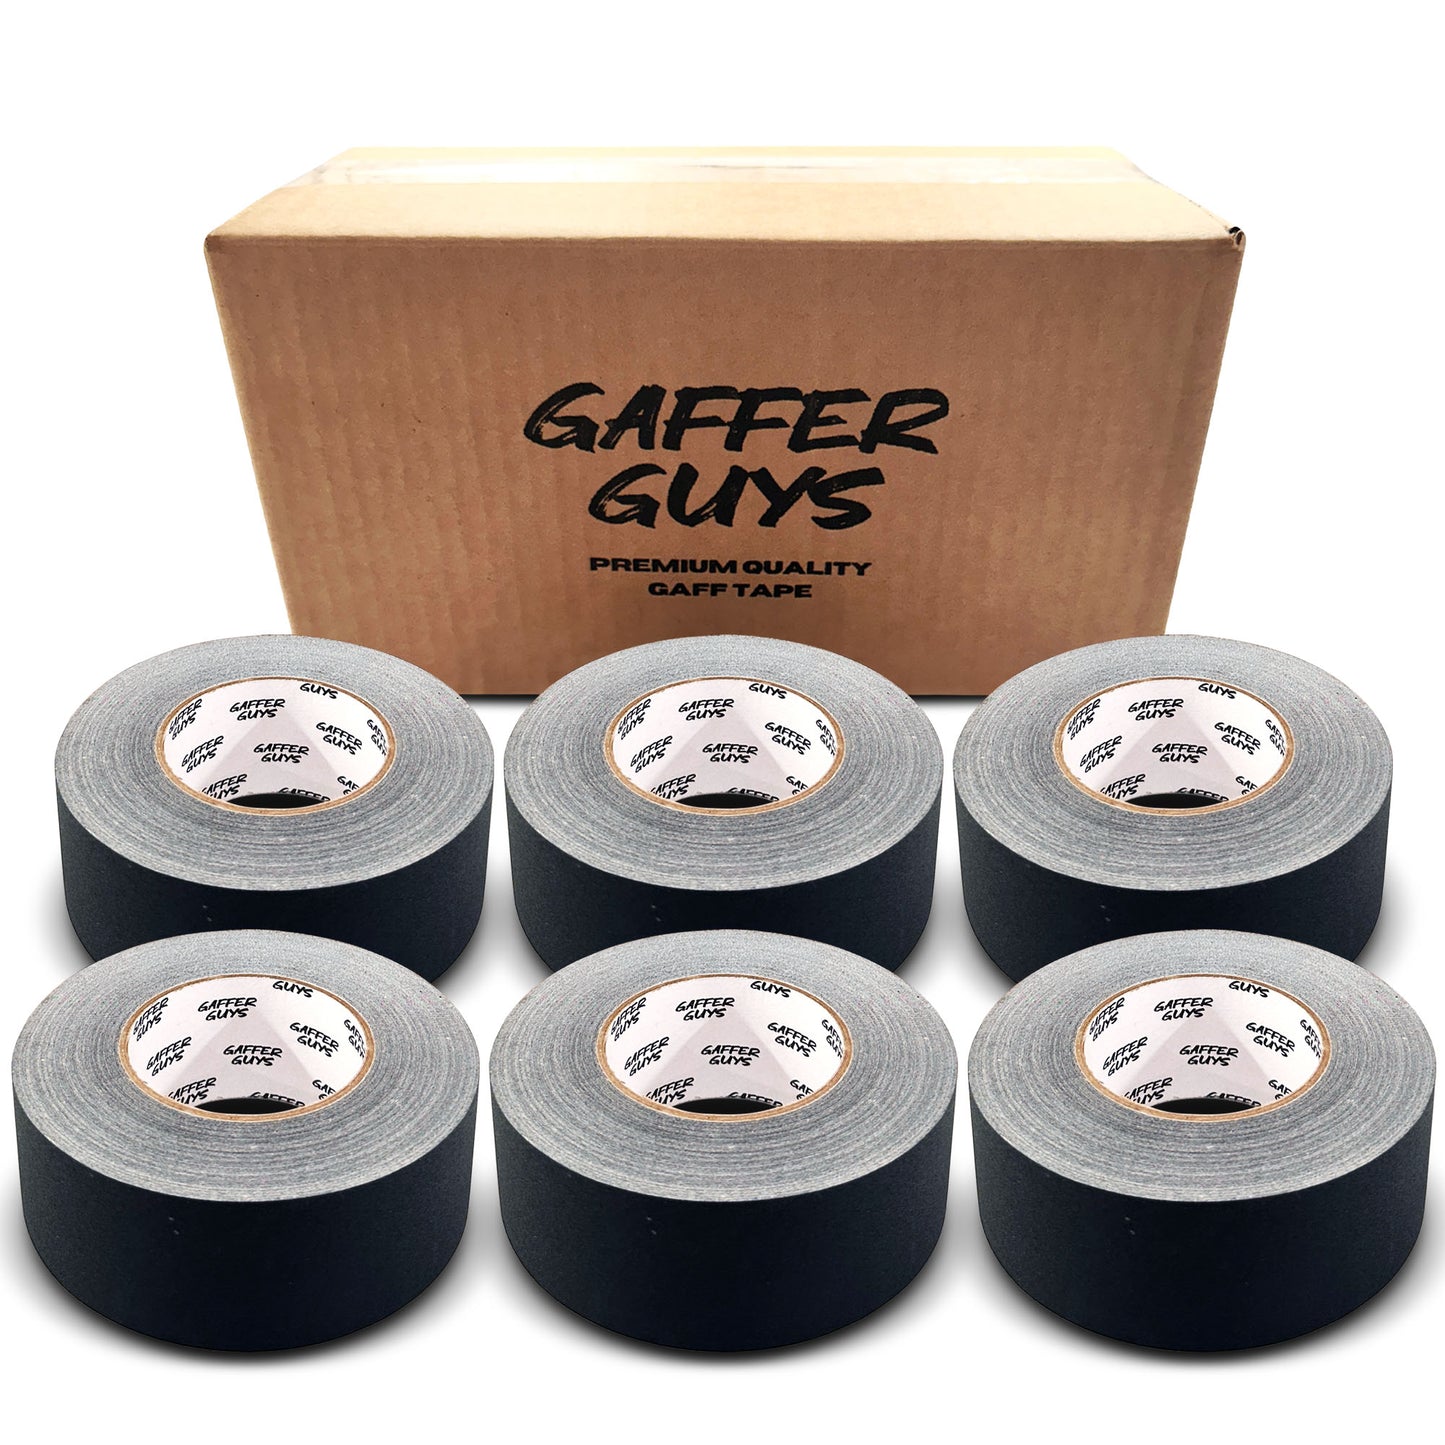 2" Gaff Tape Roll